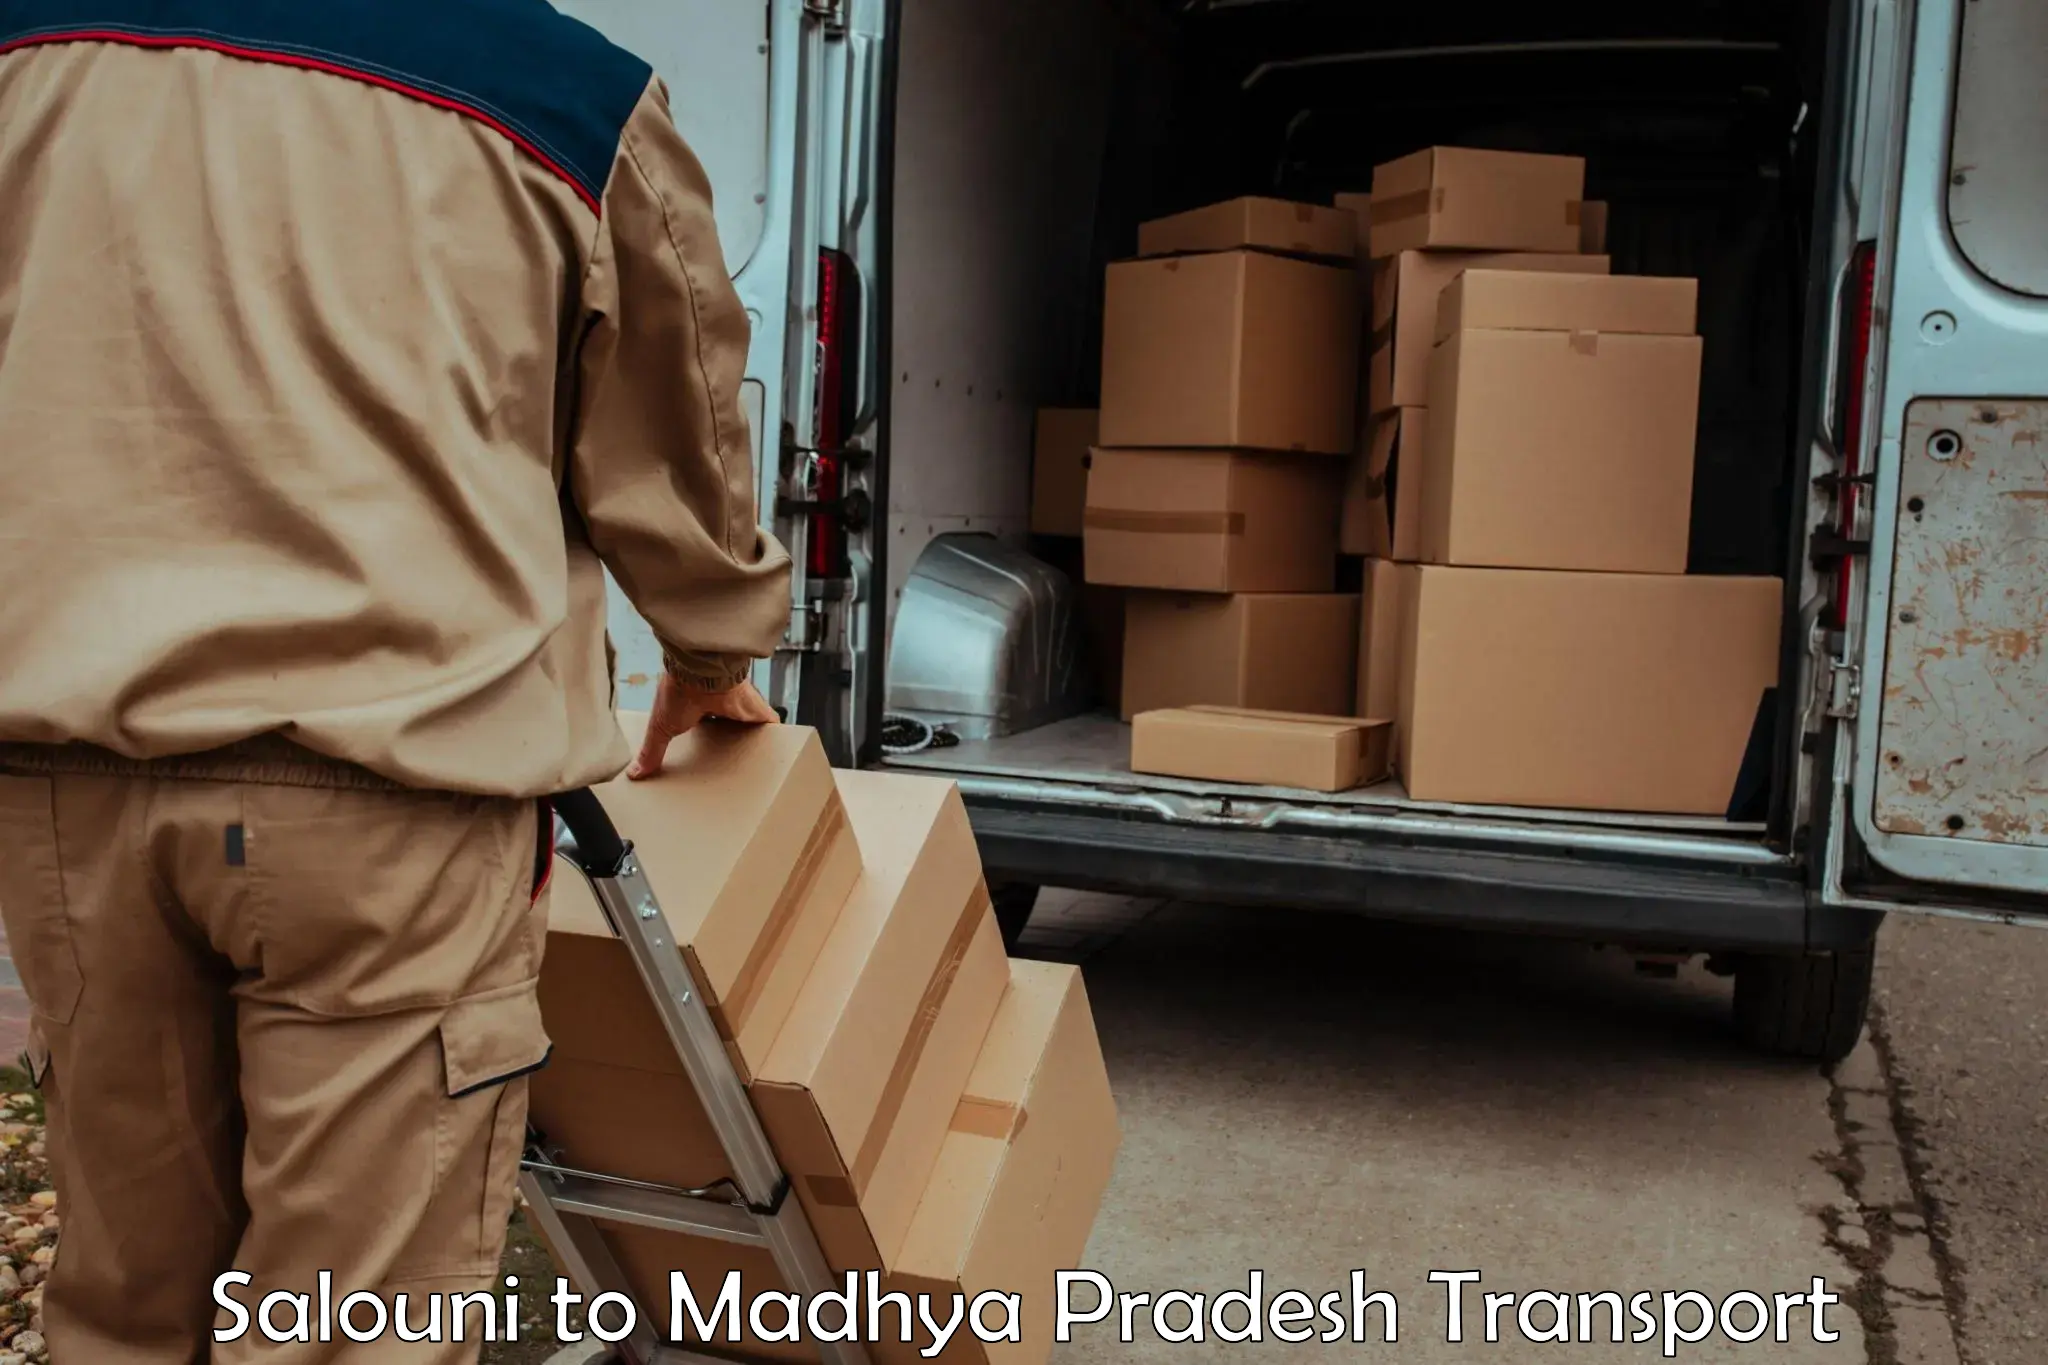 Truck transport companies in India in Salouni to Agar